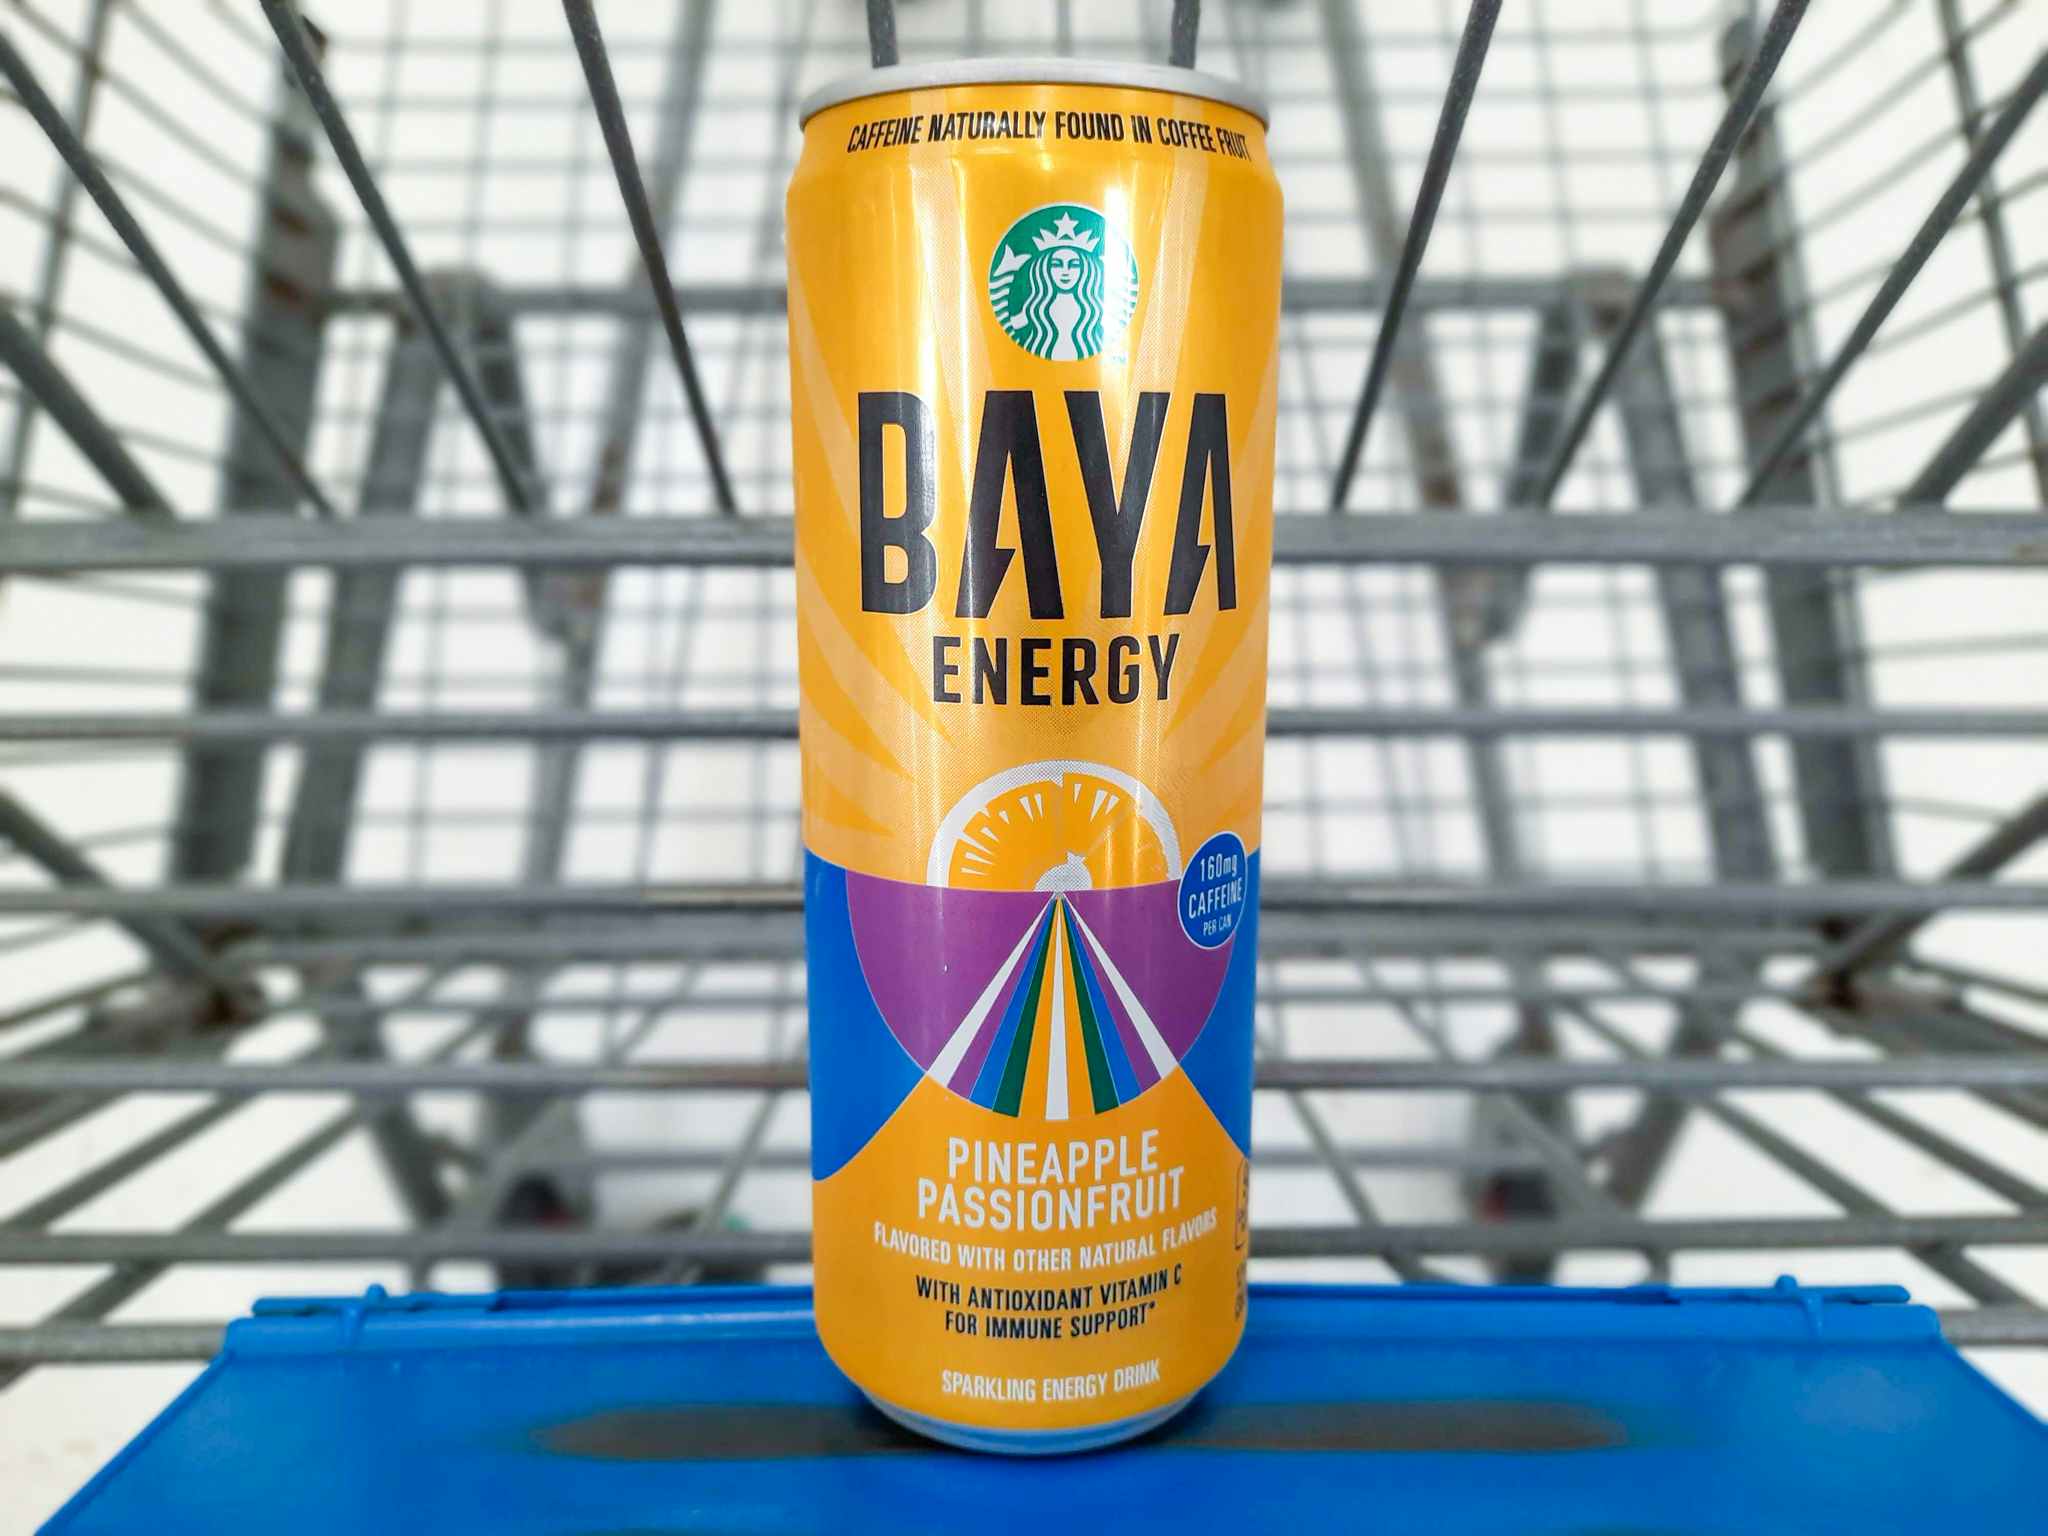 Starbucks Baya Energy in Walmart shopping cart